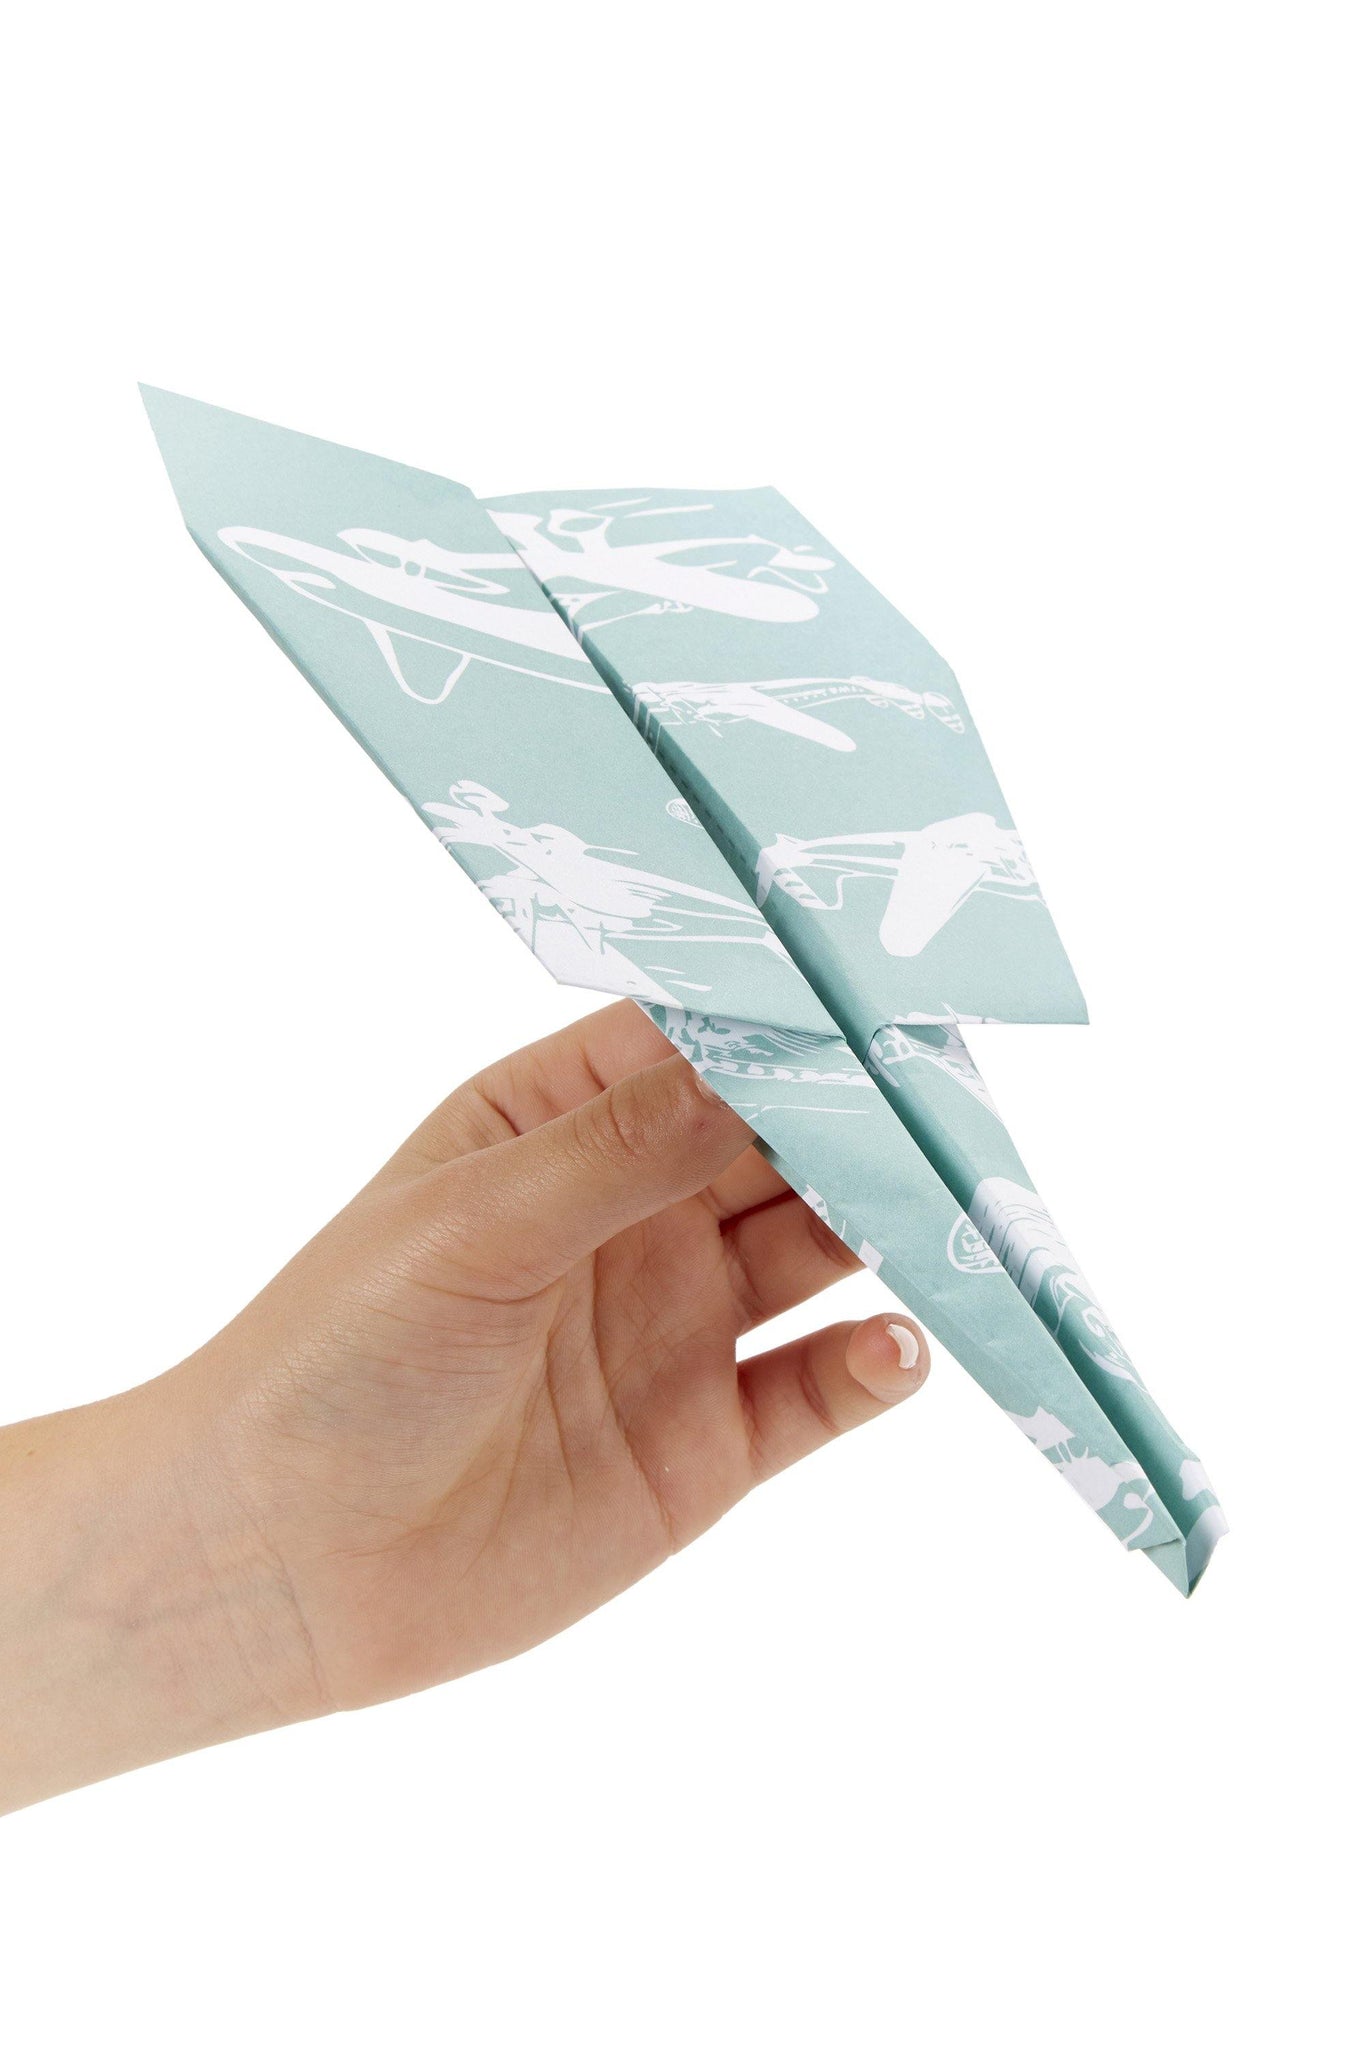 60 Second Paper Planes kit - Kits - STEM Toy - Science Museum Shop 3